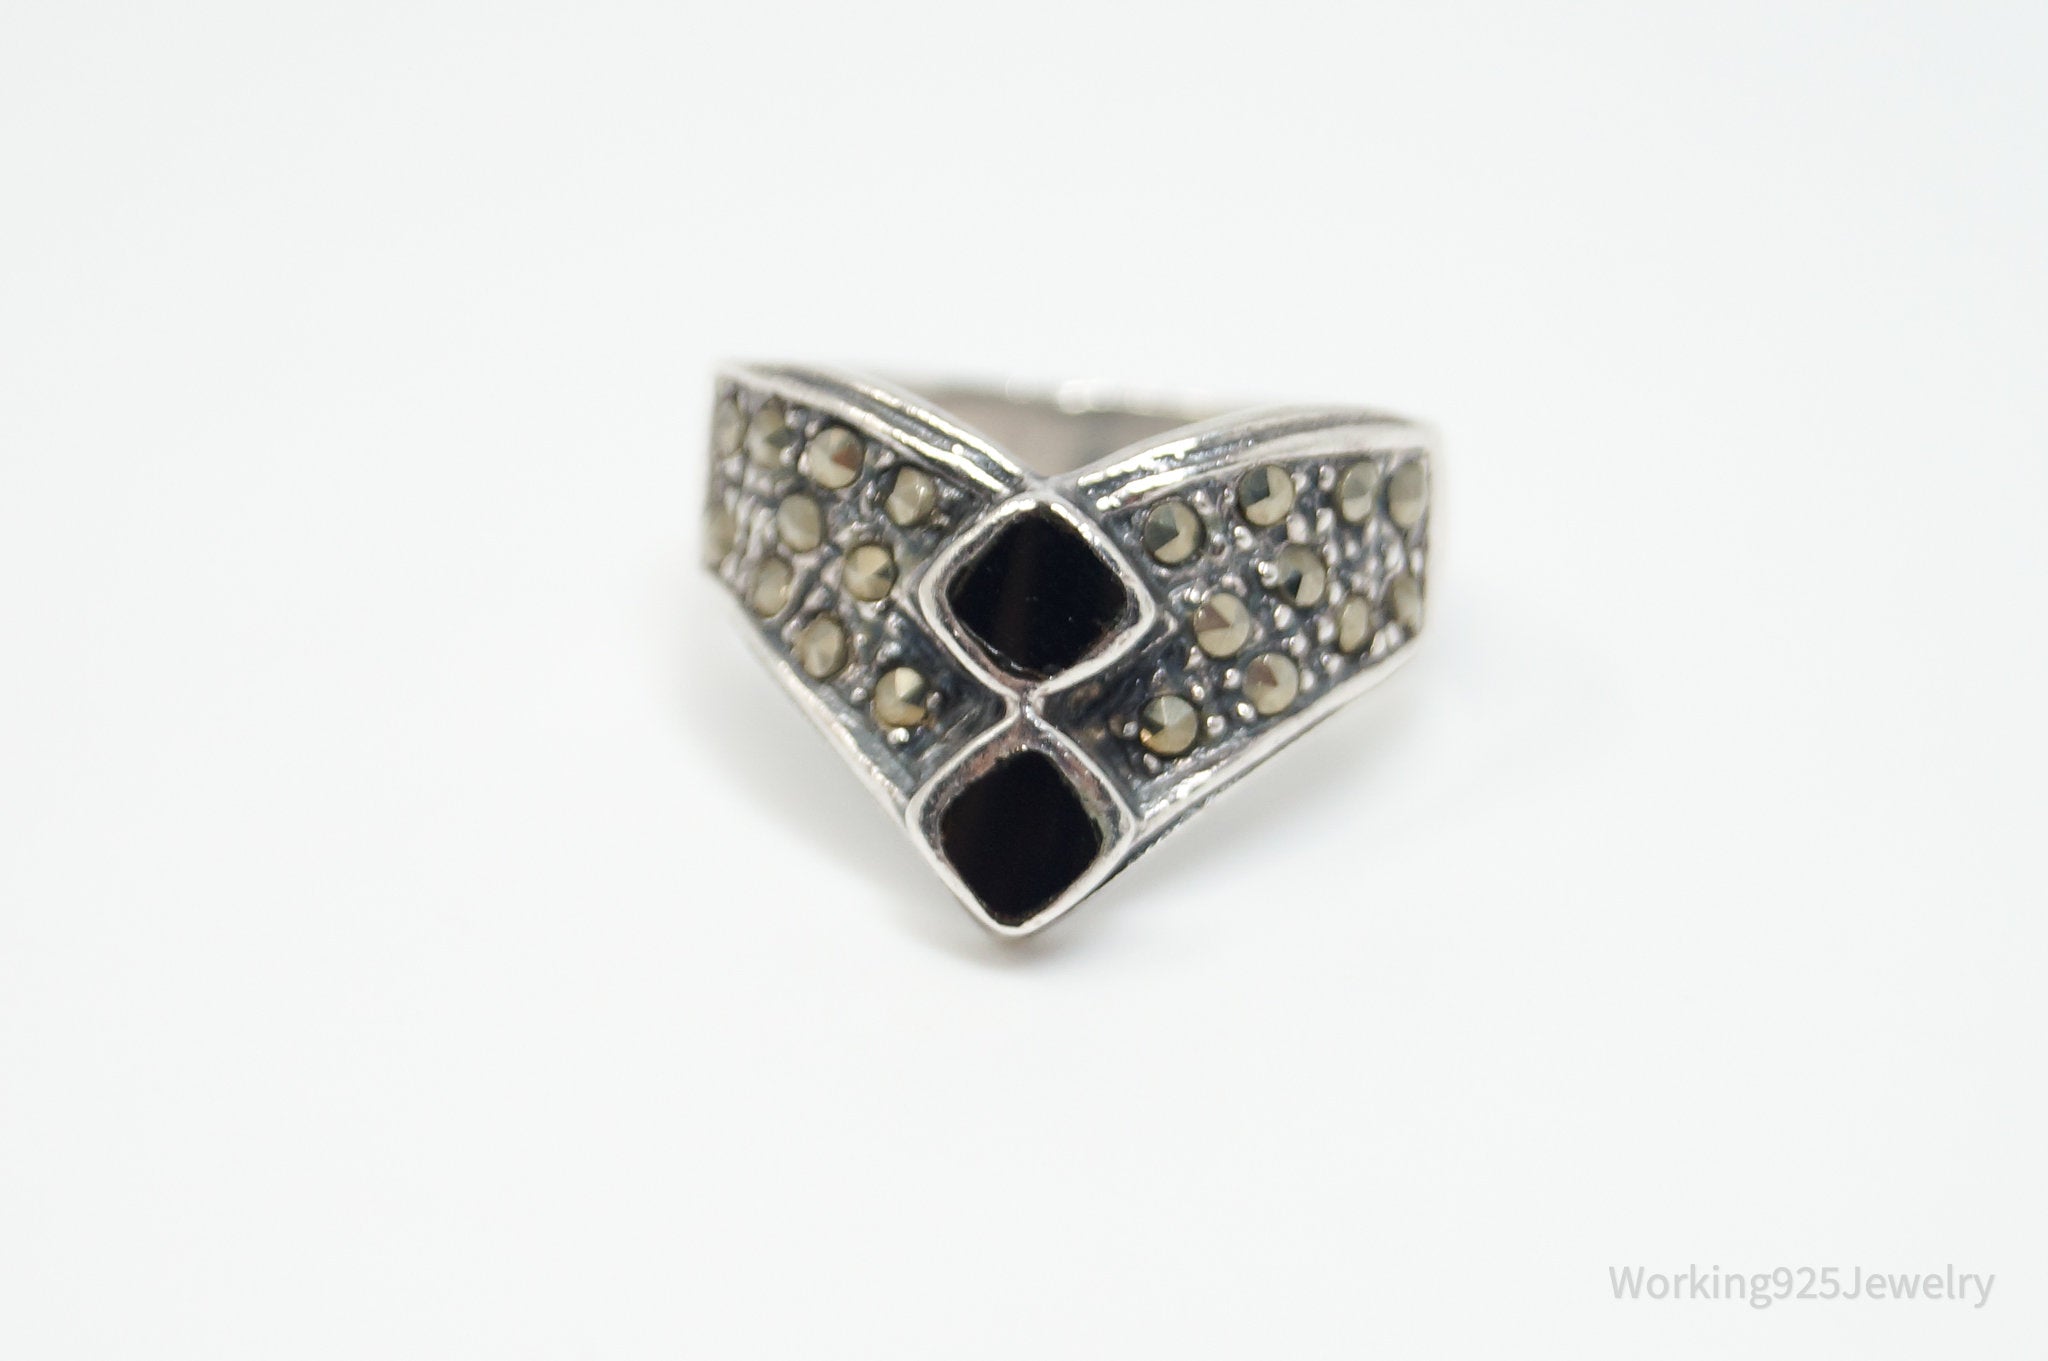 Vtg Art Deco Style Marcasite Black Onyx Ring Sterling Silver - Sz 6.75